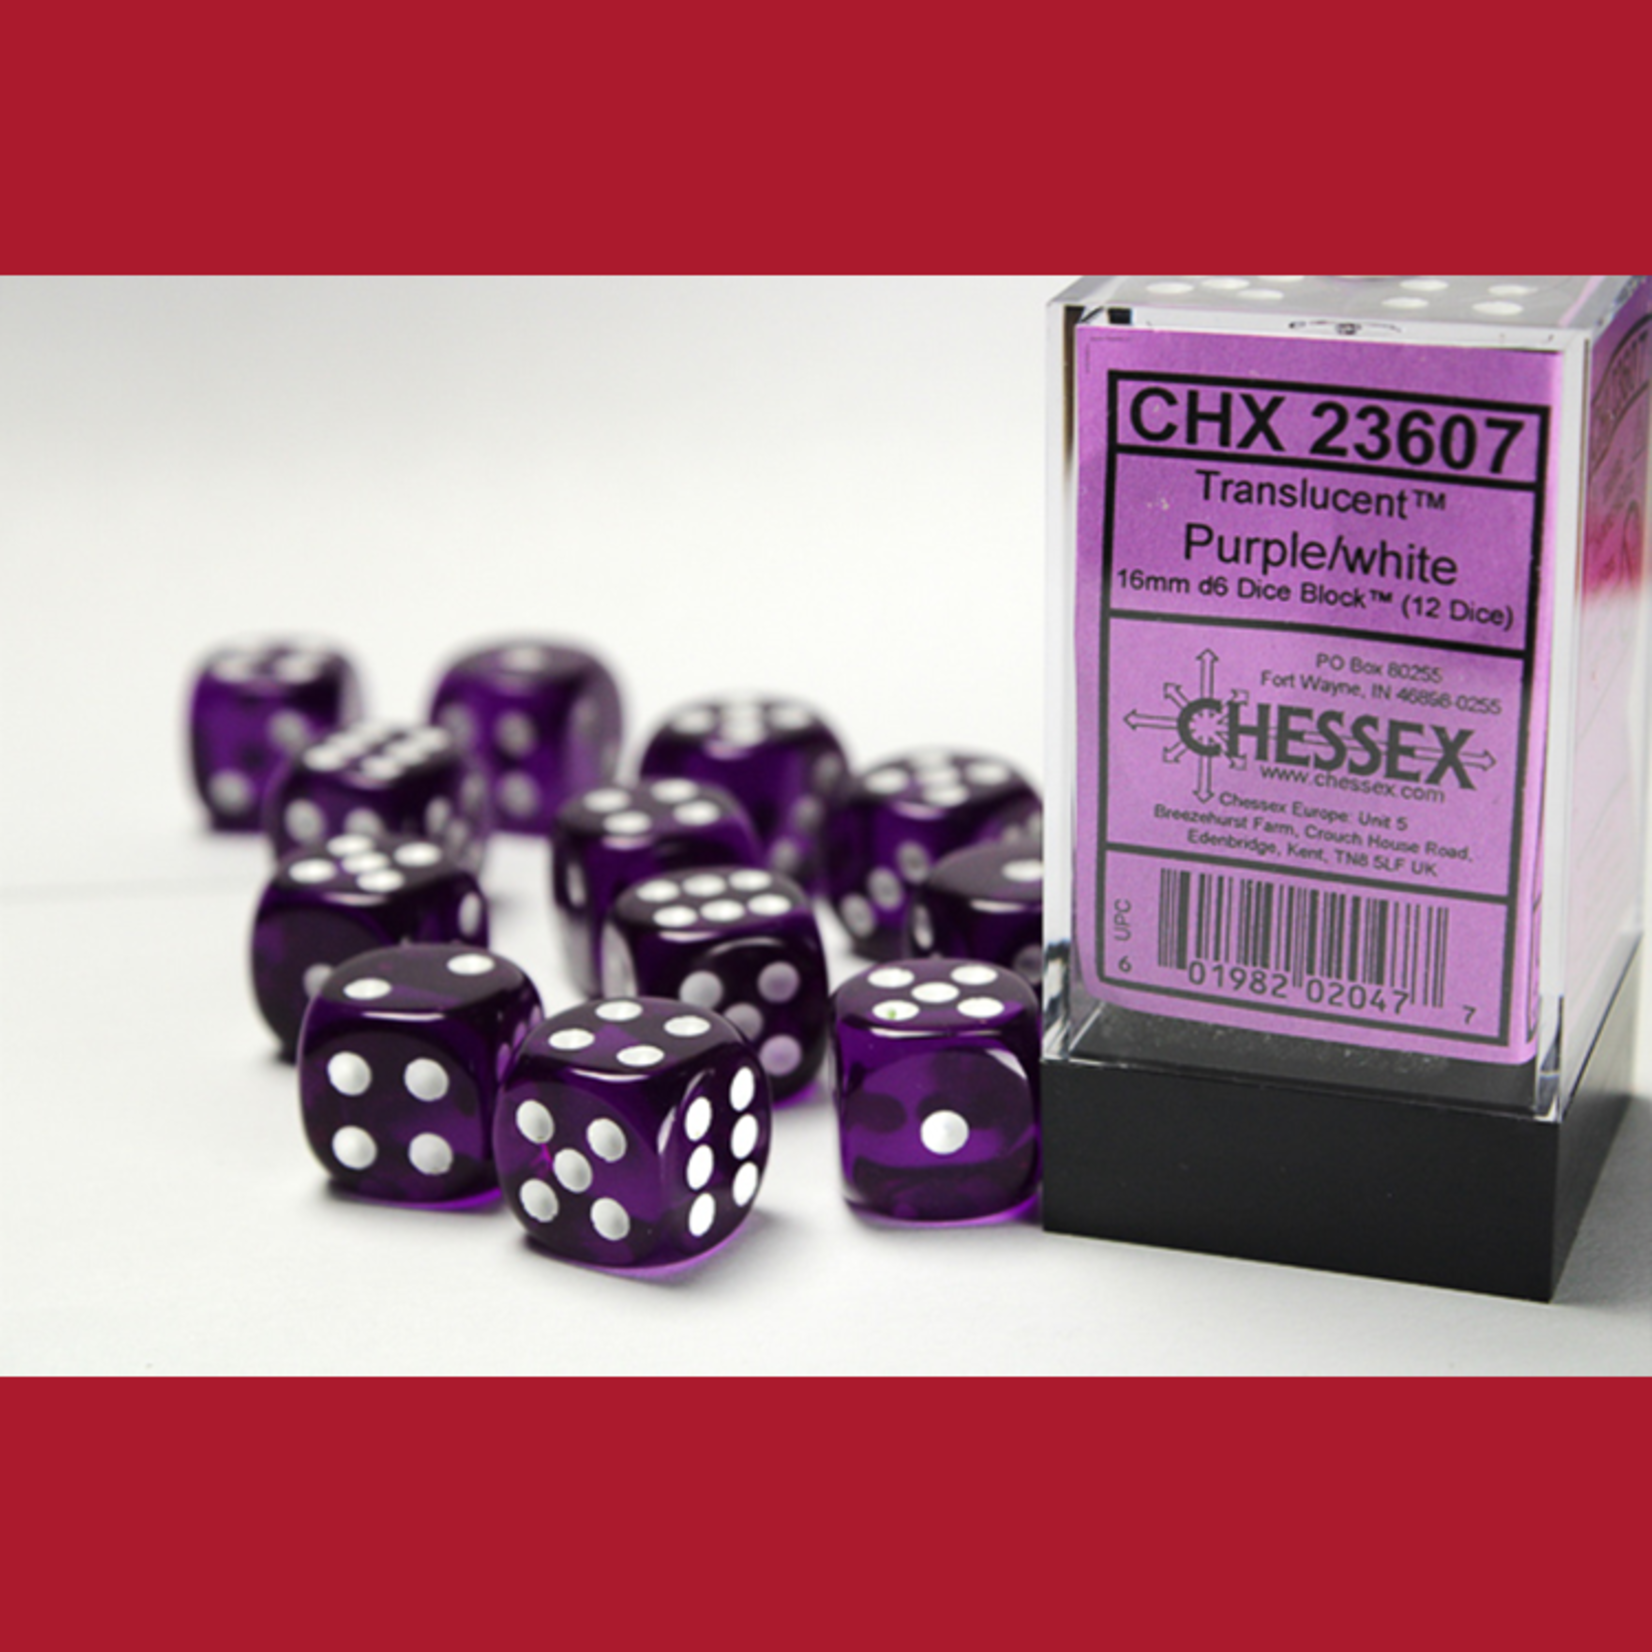 Chessex CHX 23607 Translucent Purple / White 16mm (12d6)